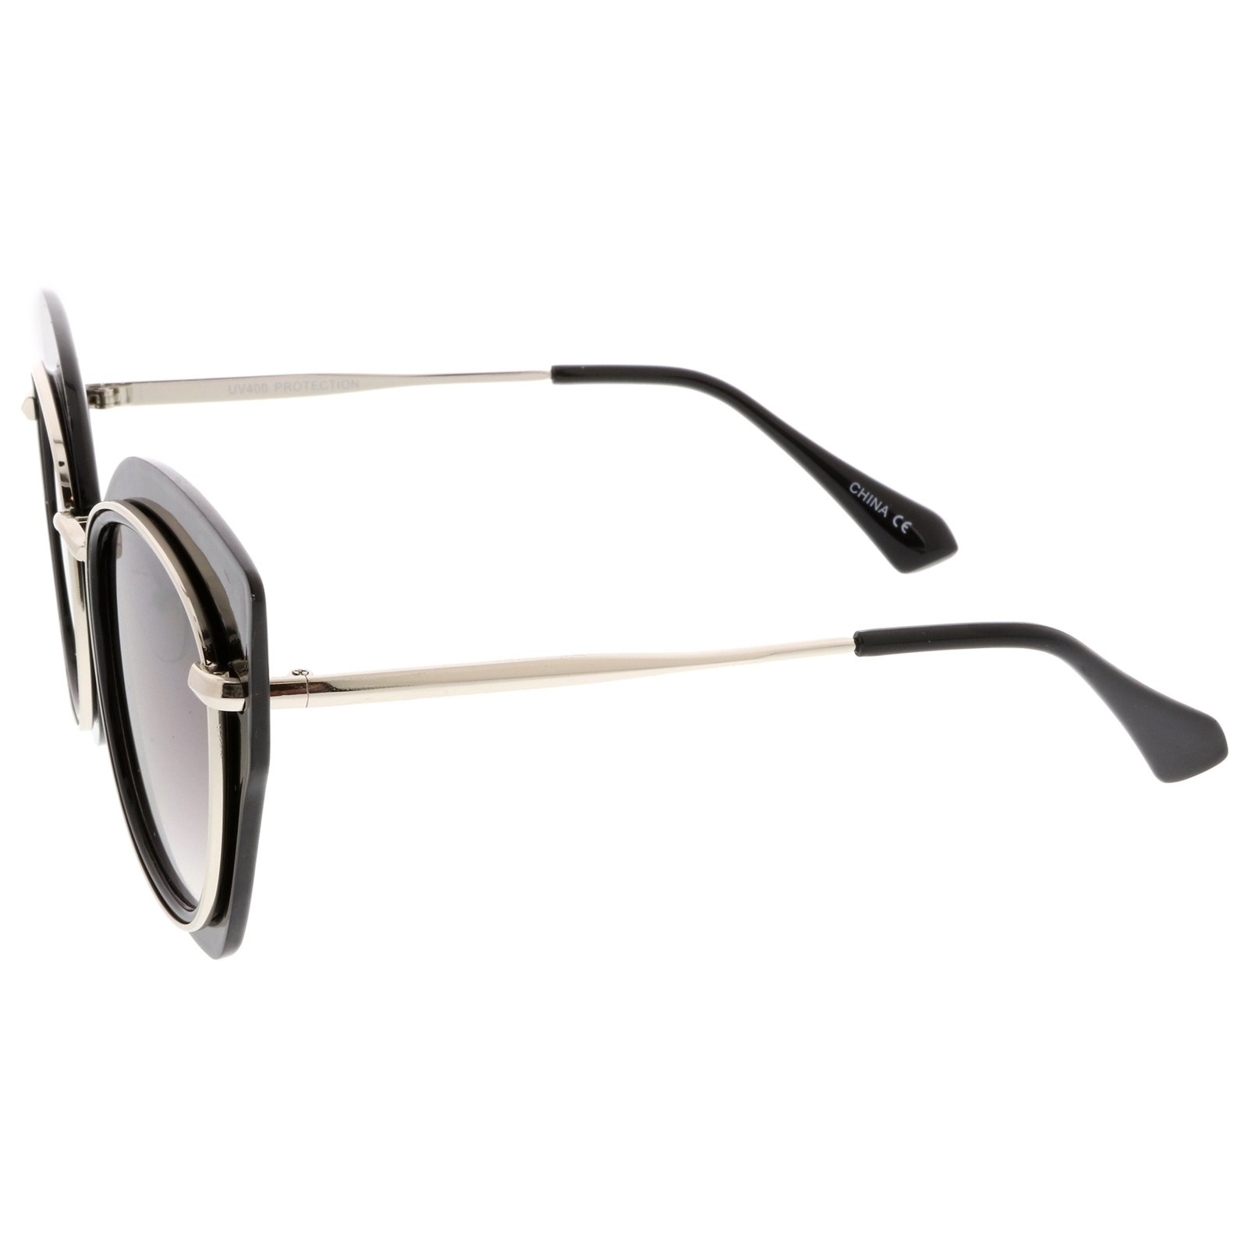 Women's Oversize Metal Trim Slim Arms Super Flat Lens Cat Eye Sunglasses 57mm - Tortoise-Gold / Lavender